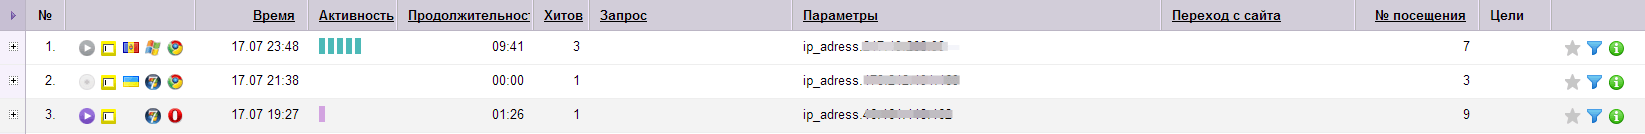 IP адреса посетителей сайта в отчете Яндекс Метрики